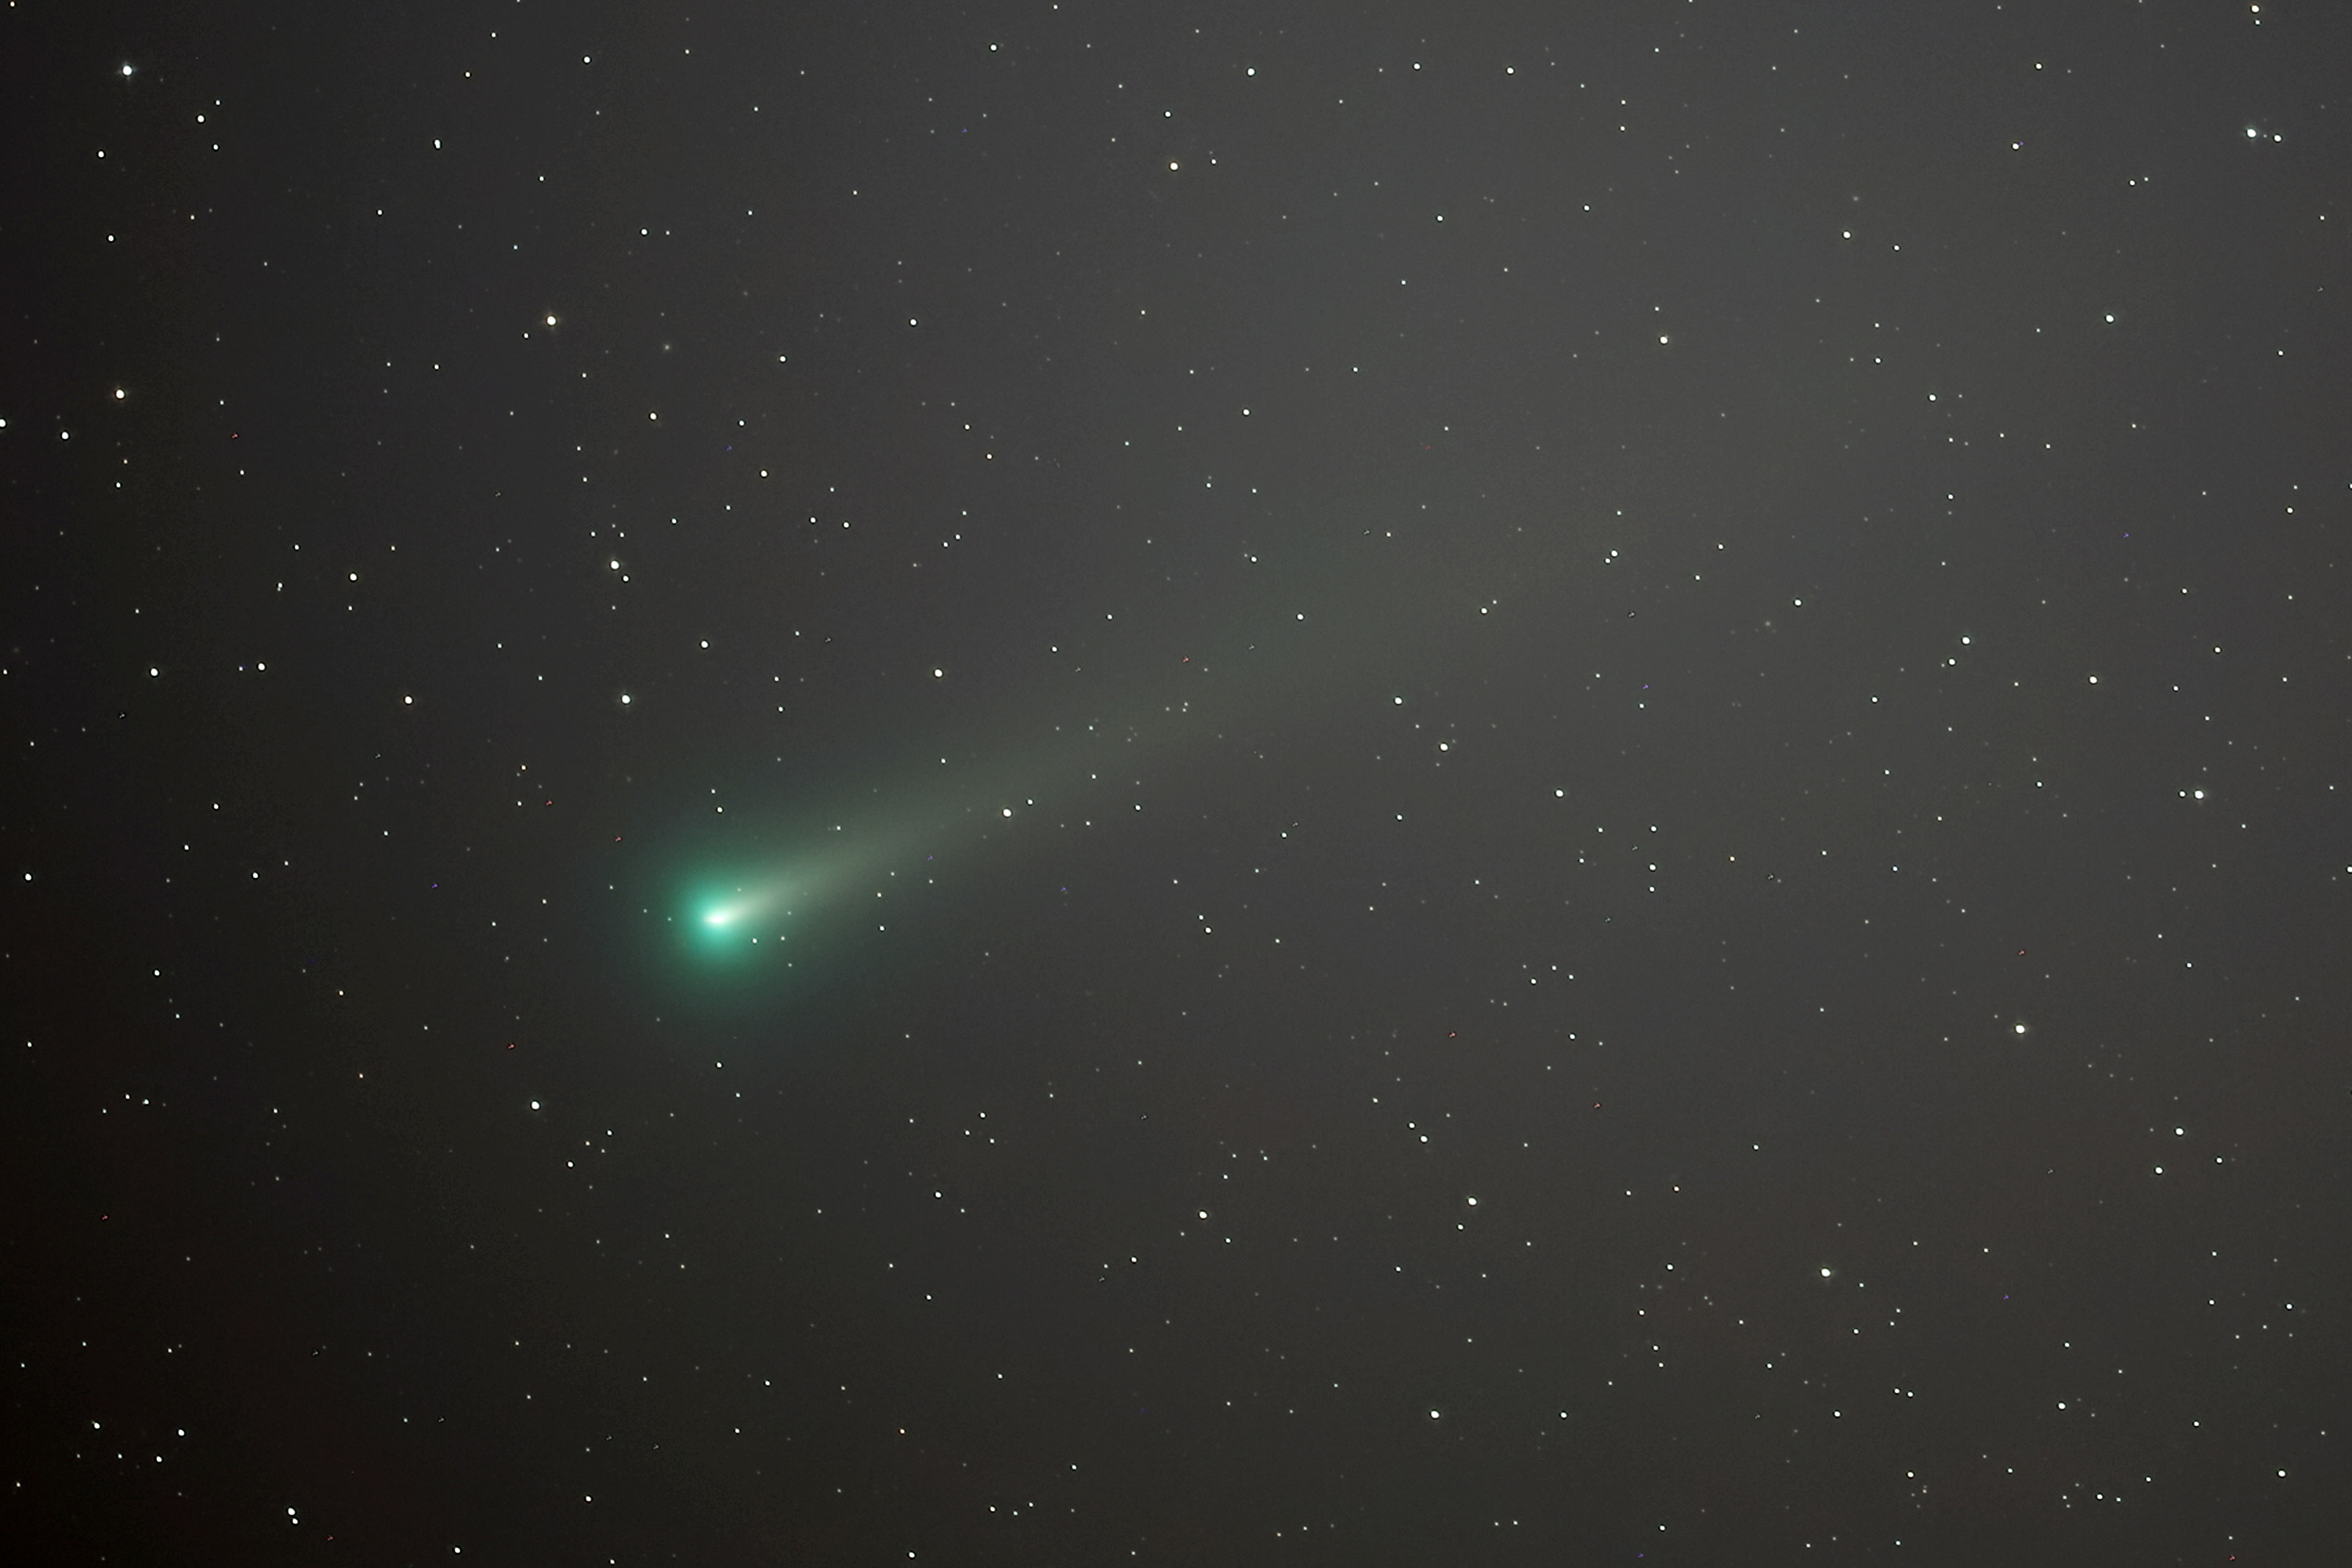 『C/2021 A1 レナード彗星』(2021年12月2日)